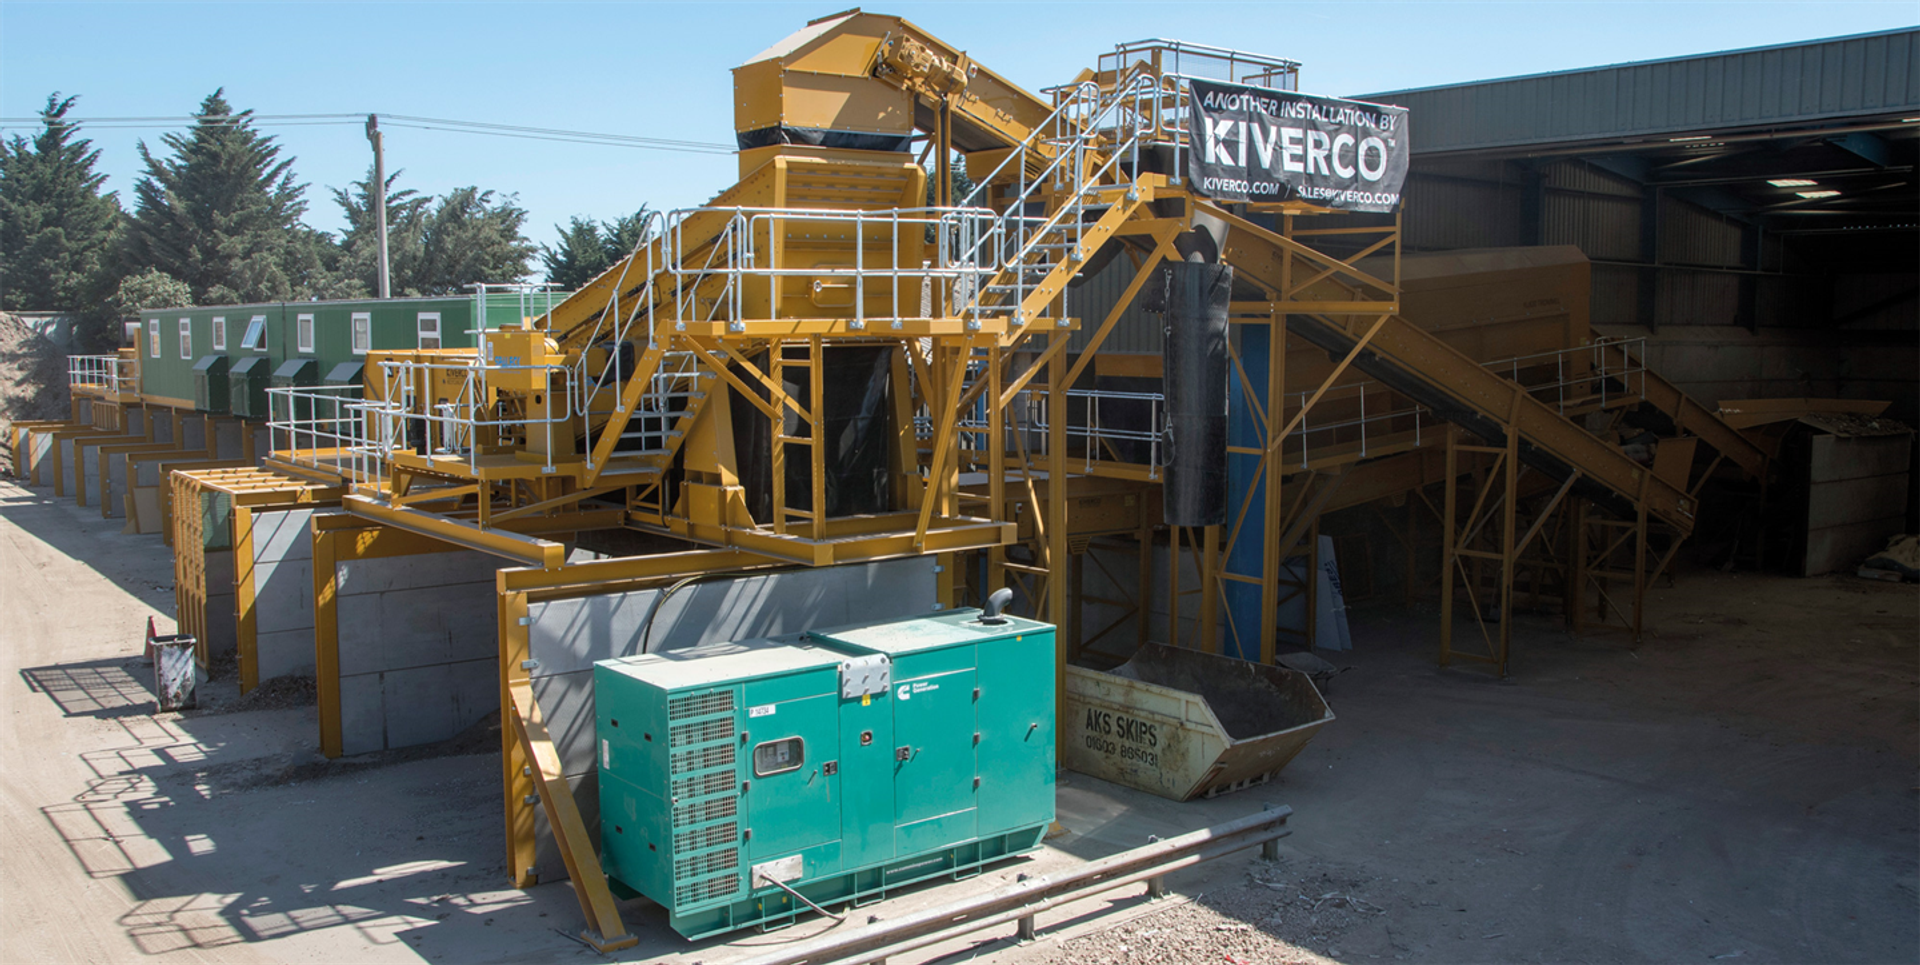 Kiverco Recycling Systems Ltd.